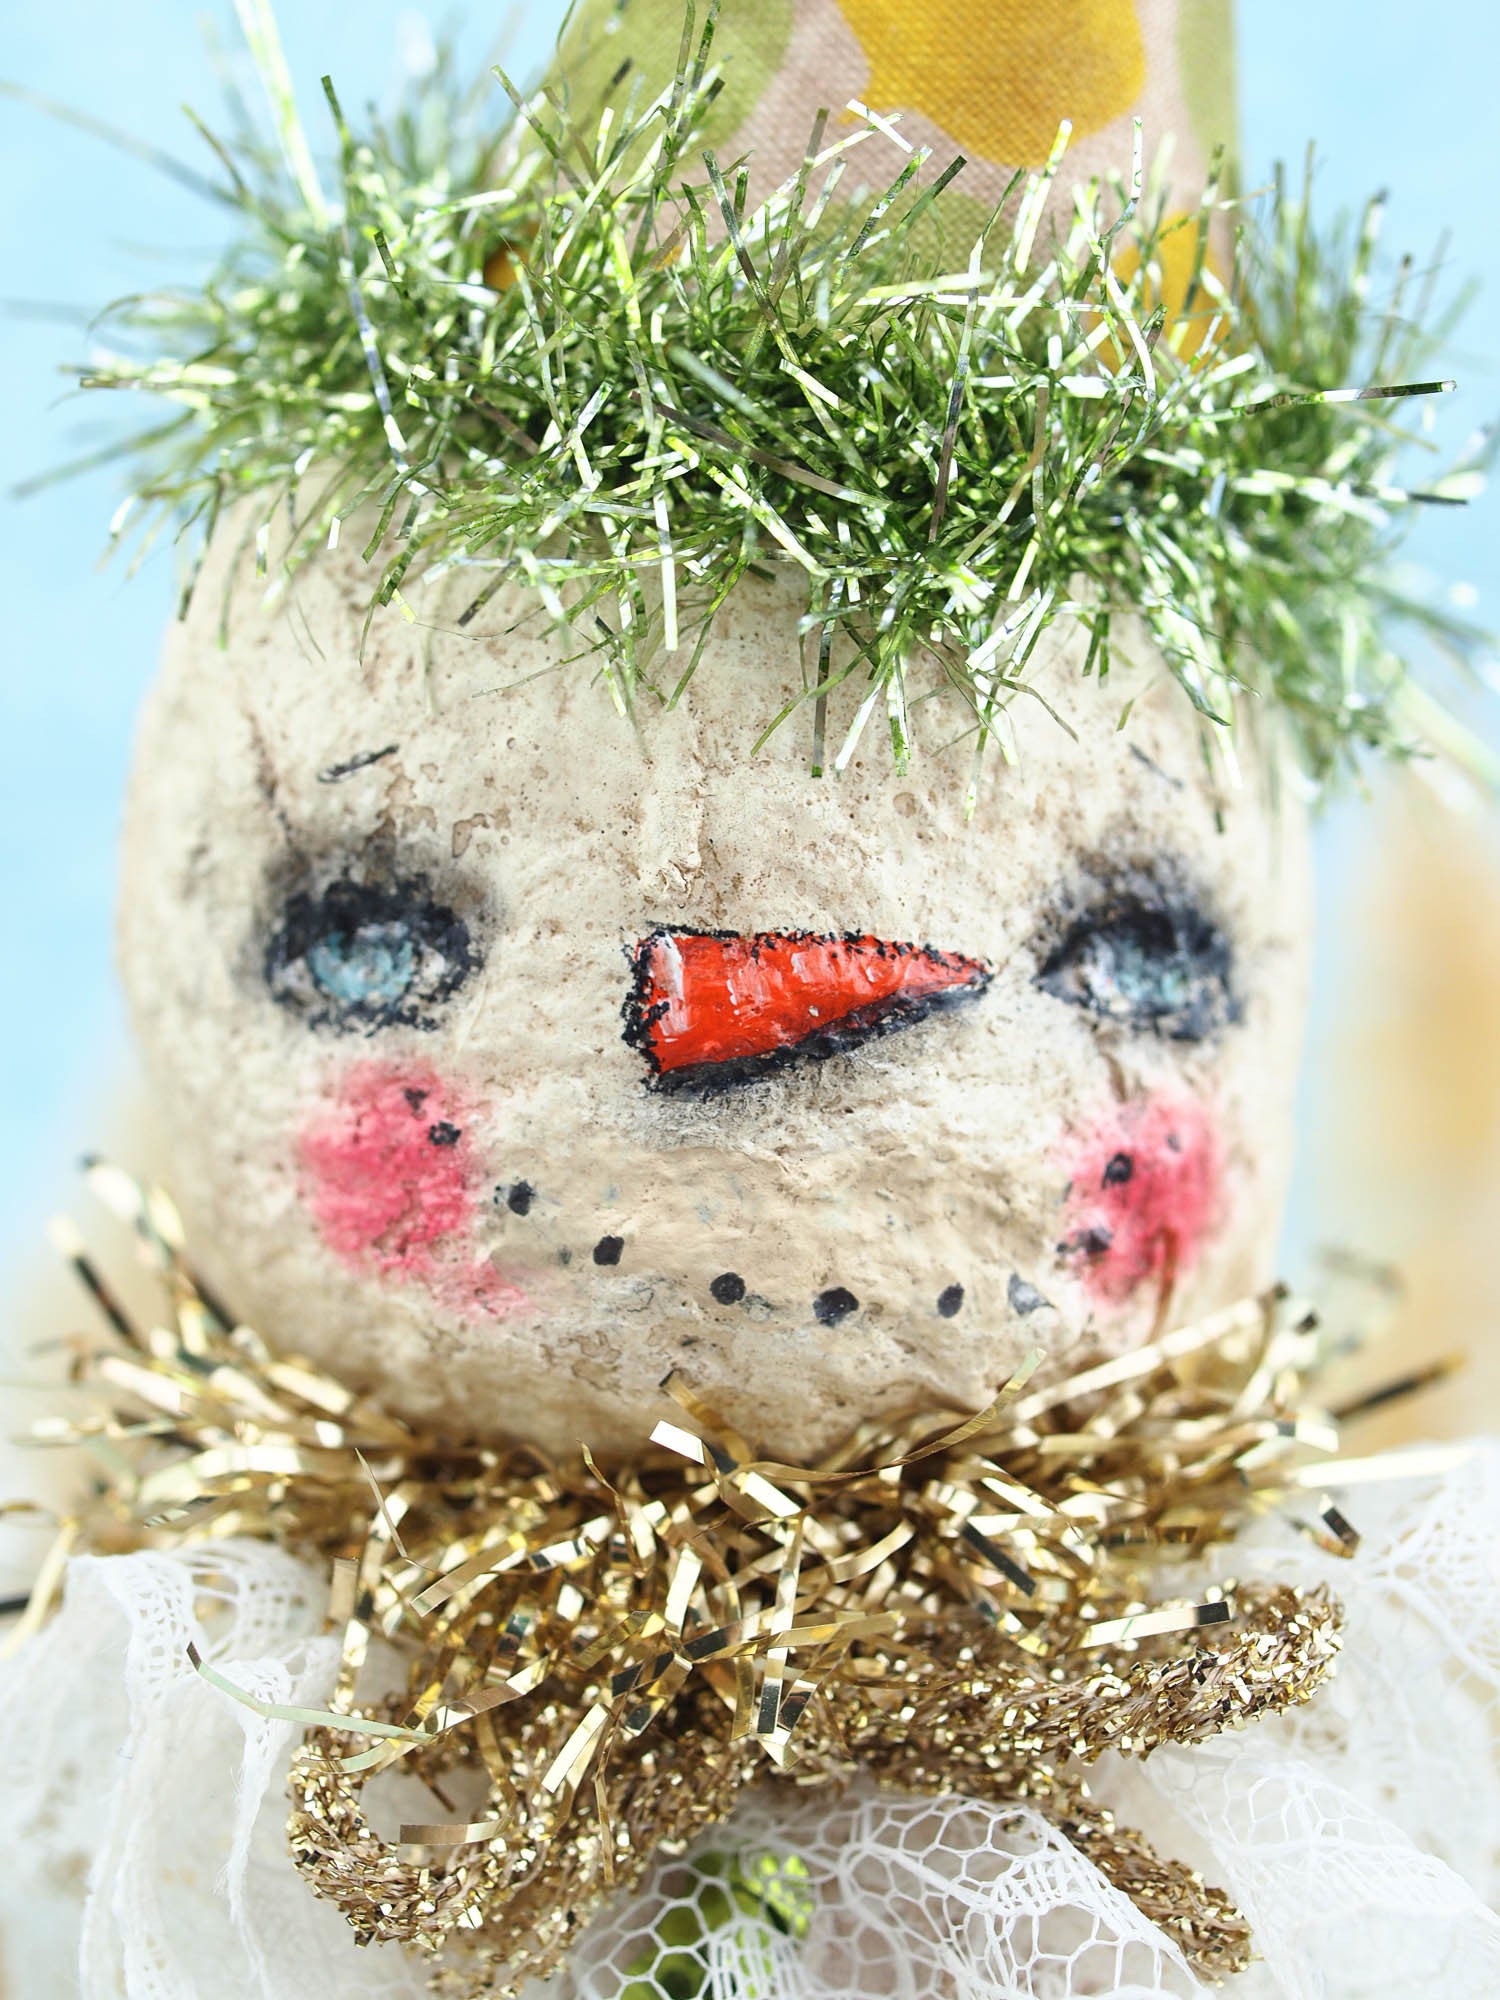 John the snowman, Miniature Dolls by Danita Art